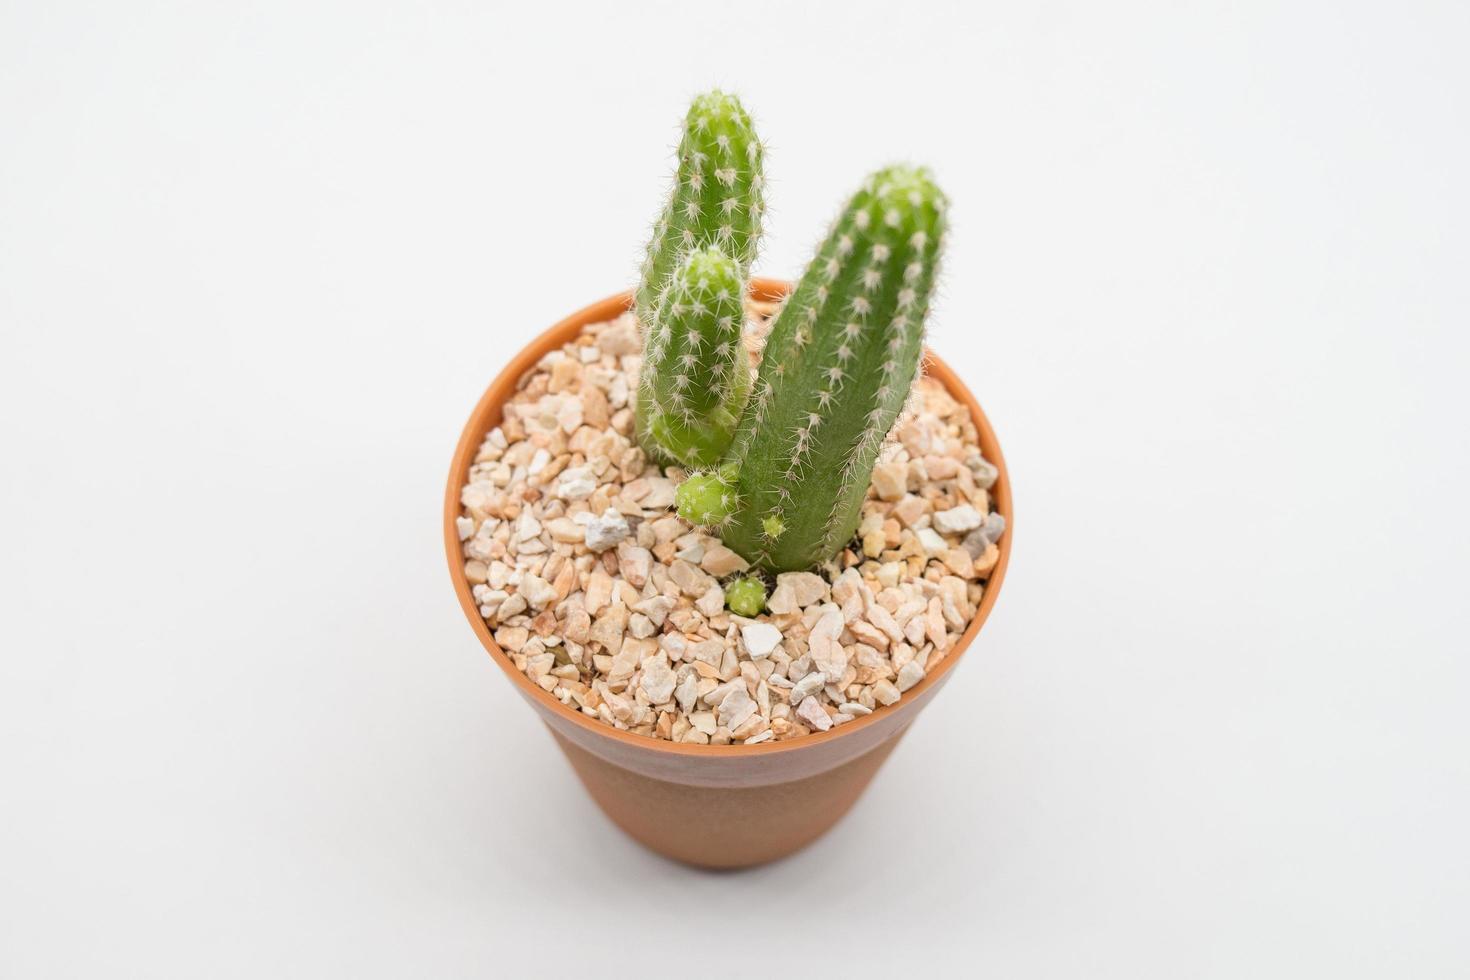 cactus on a white background photo